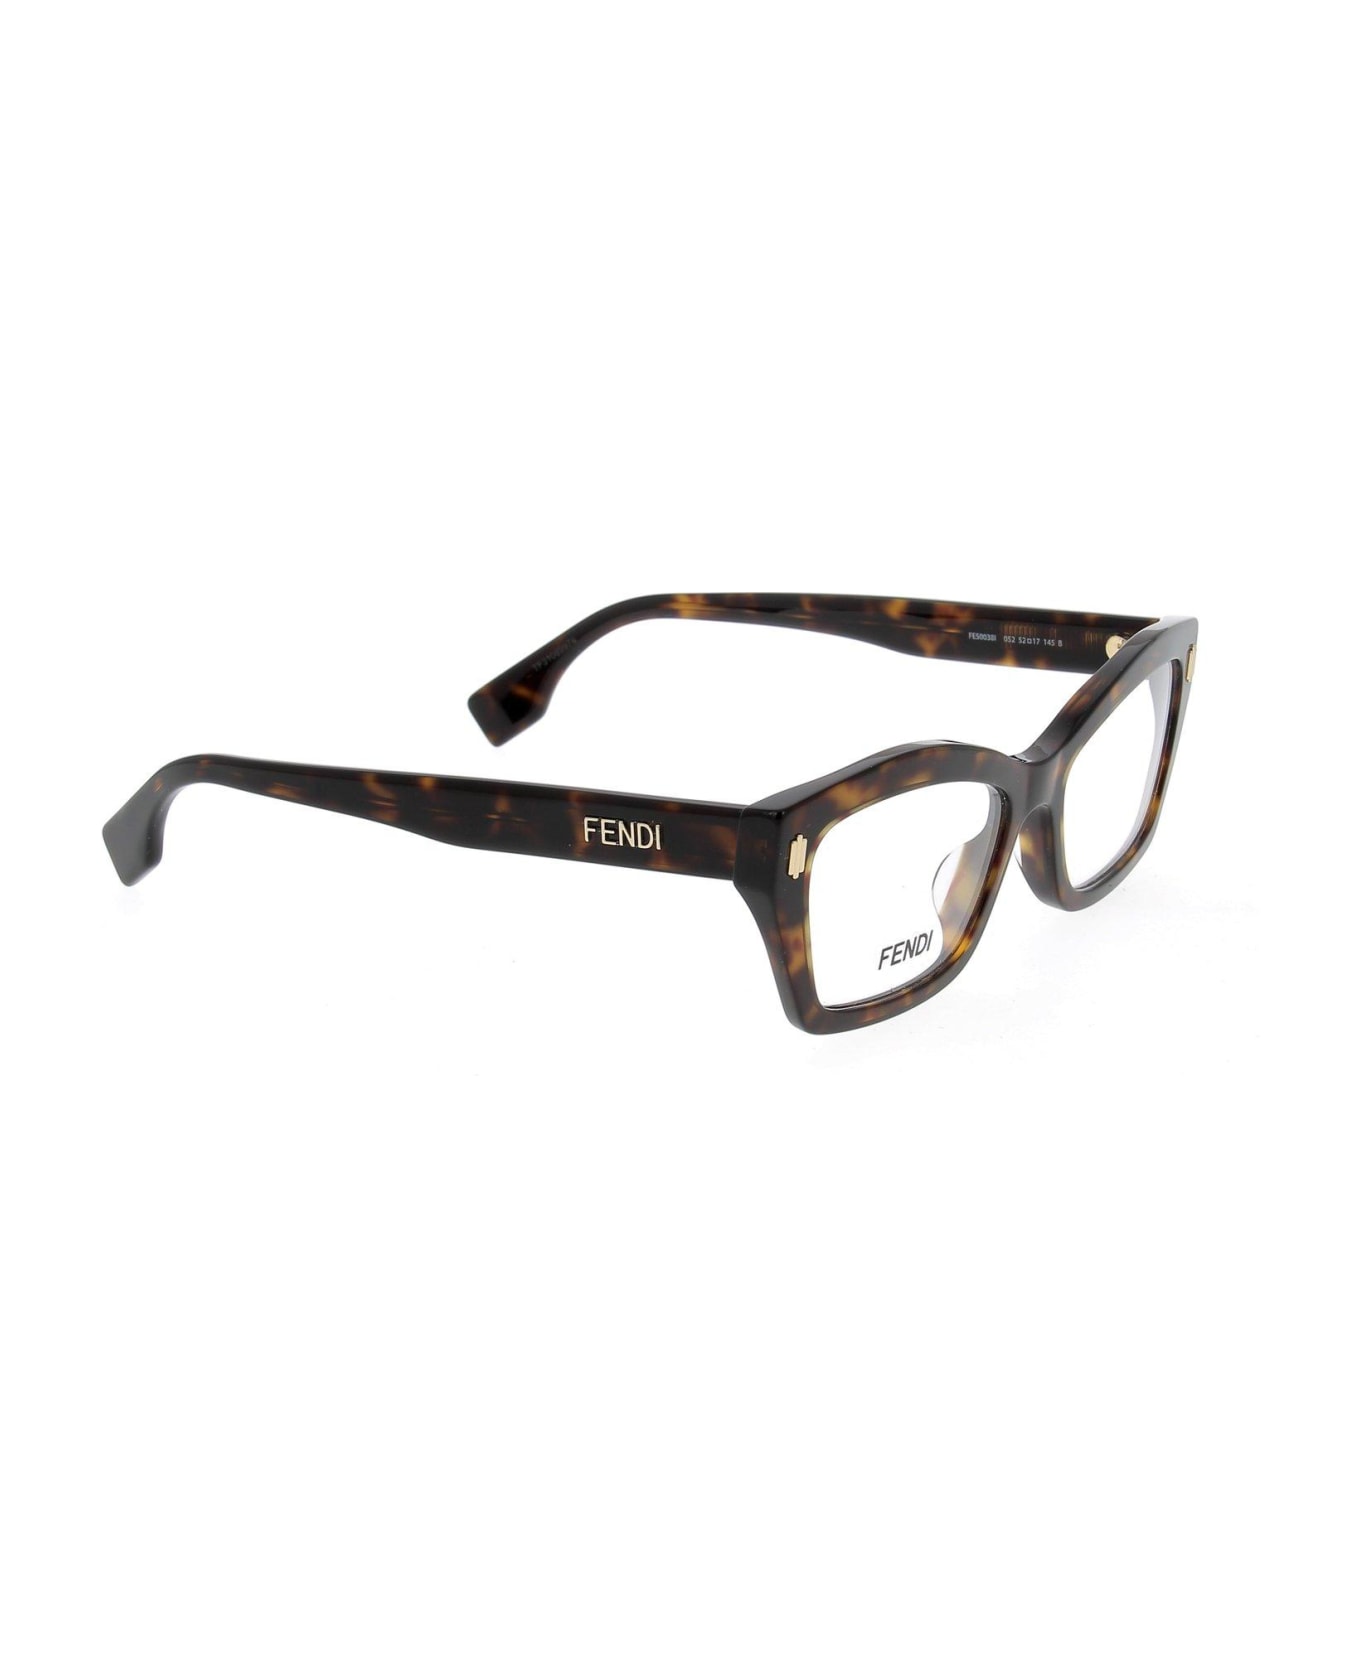 Fendi Eyewear Square Frame Glasses - 052